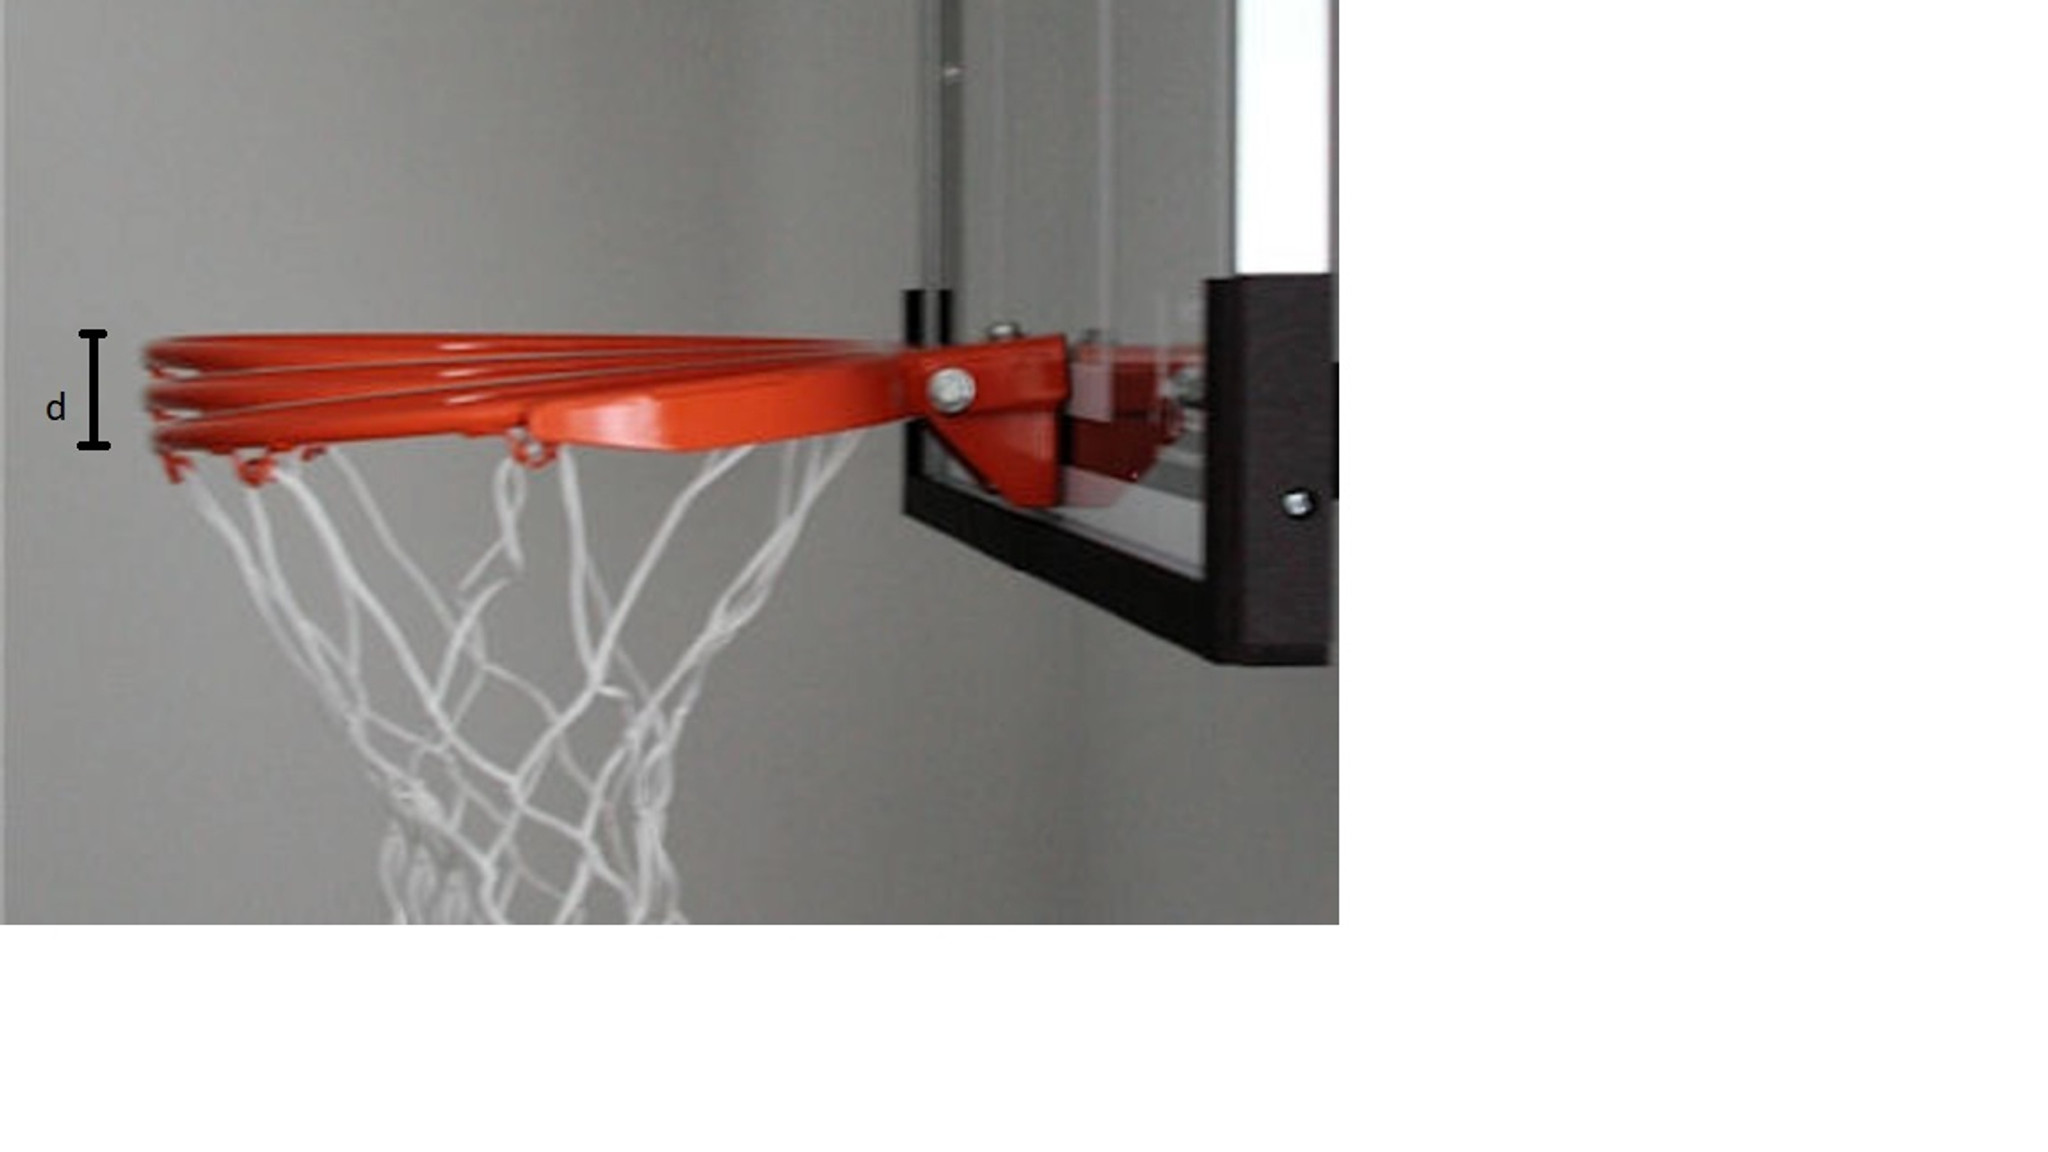 Wall Mounted Mini Basketball Hoop - Mini Pro Xtreme Hoop Set